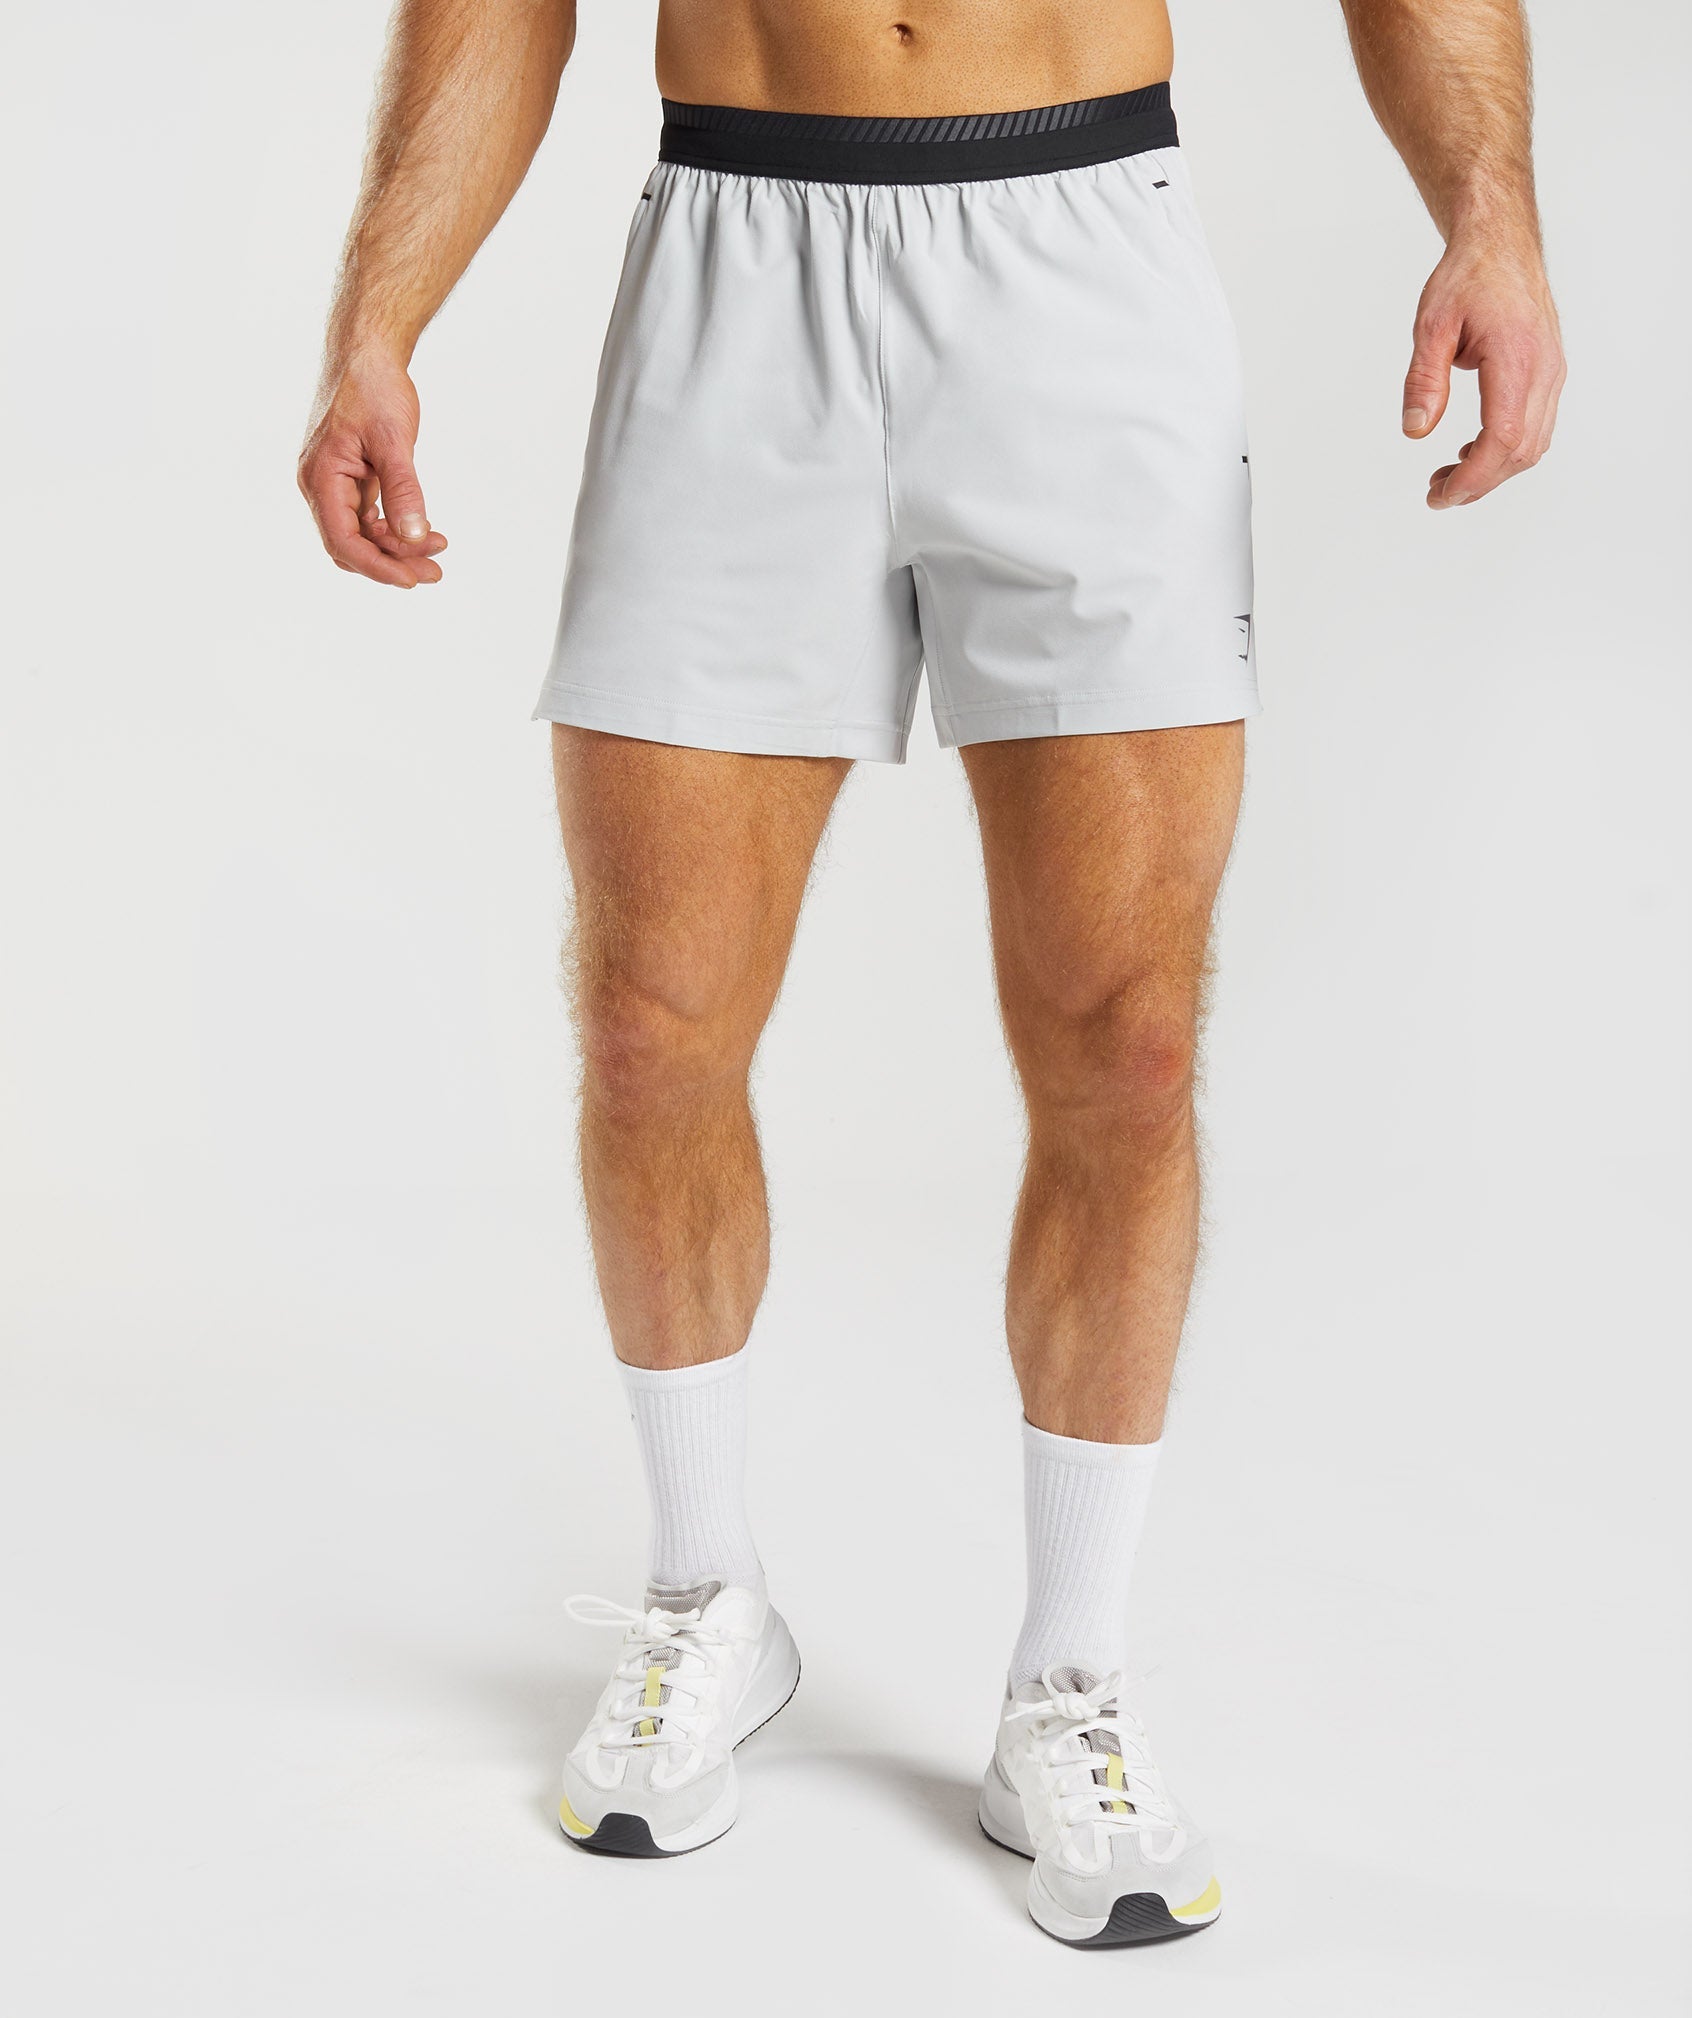 Gymshark mens small shorts - Gem